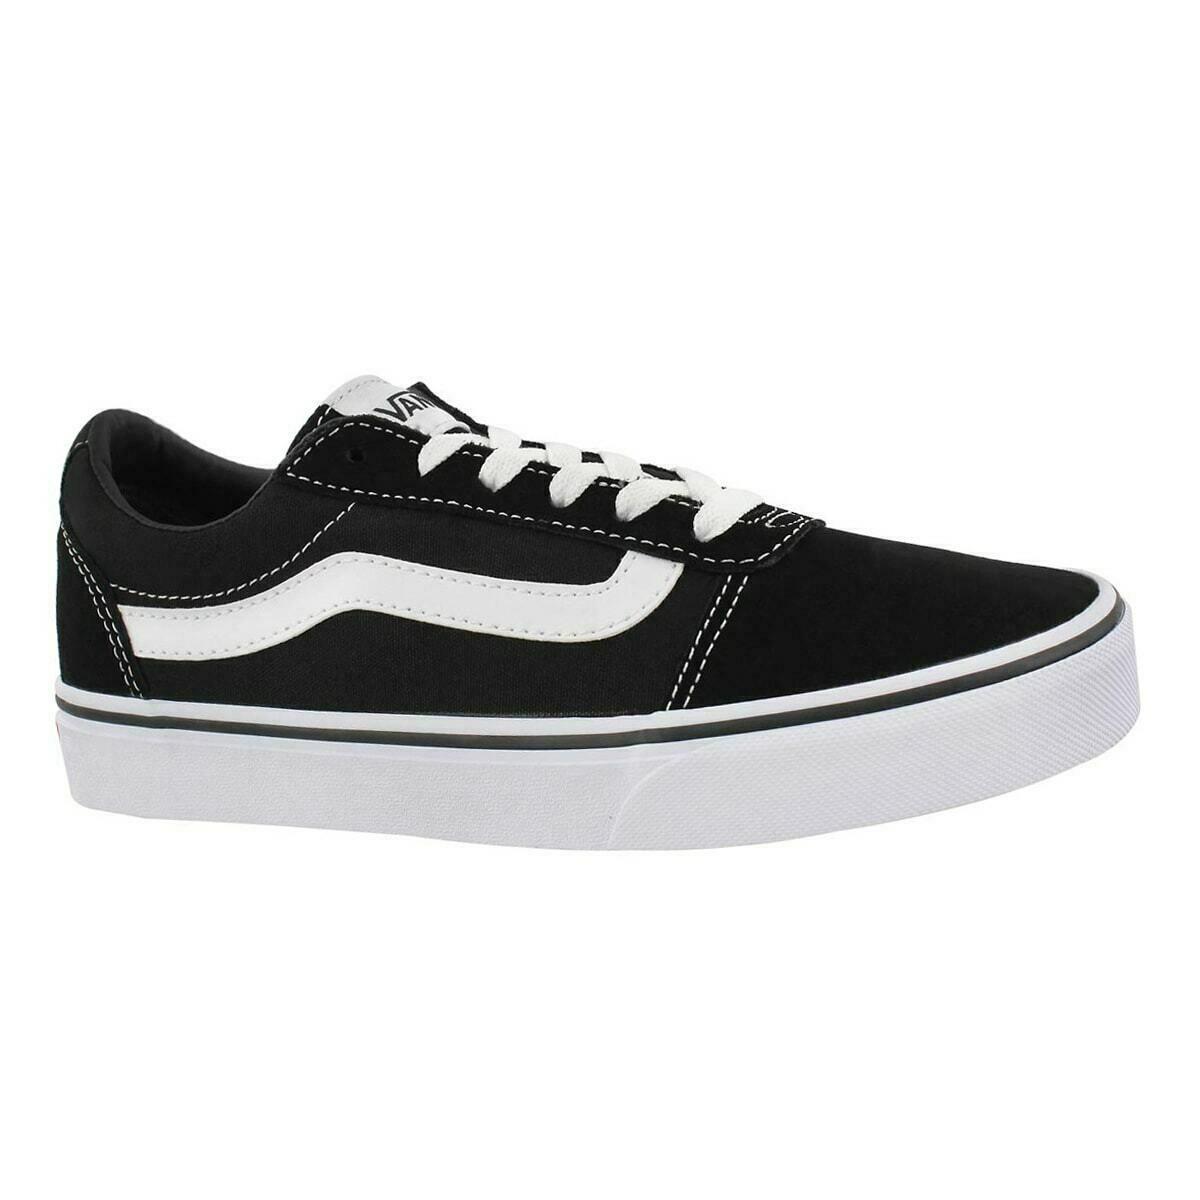 Vans Ward Women`s Shoes Sneakers Skate Casual Low Tops BLACK/WHITE